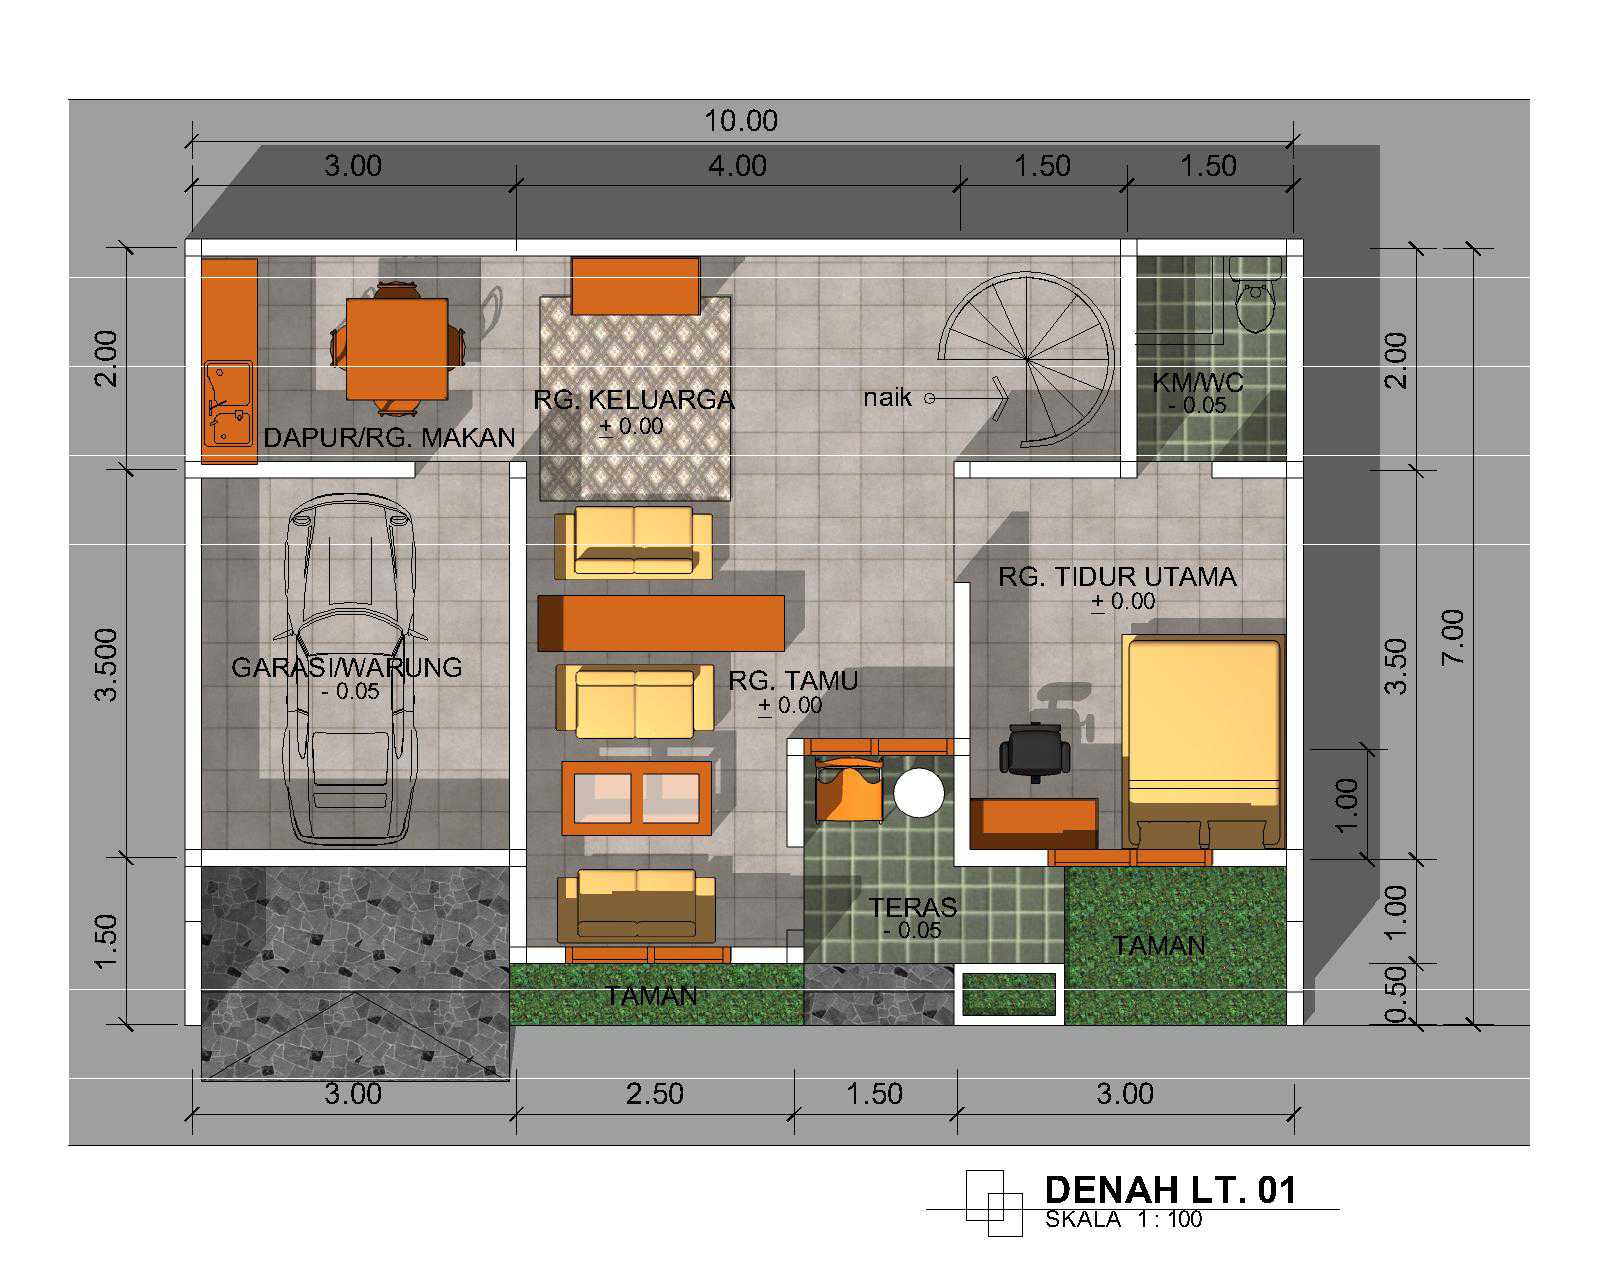 Donwload Kumpulan Desain Rumah Minimalis Dan Rab Terlengkap Seribu